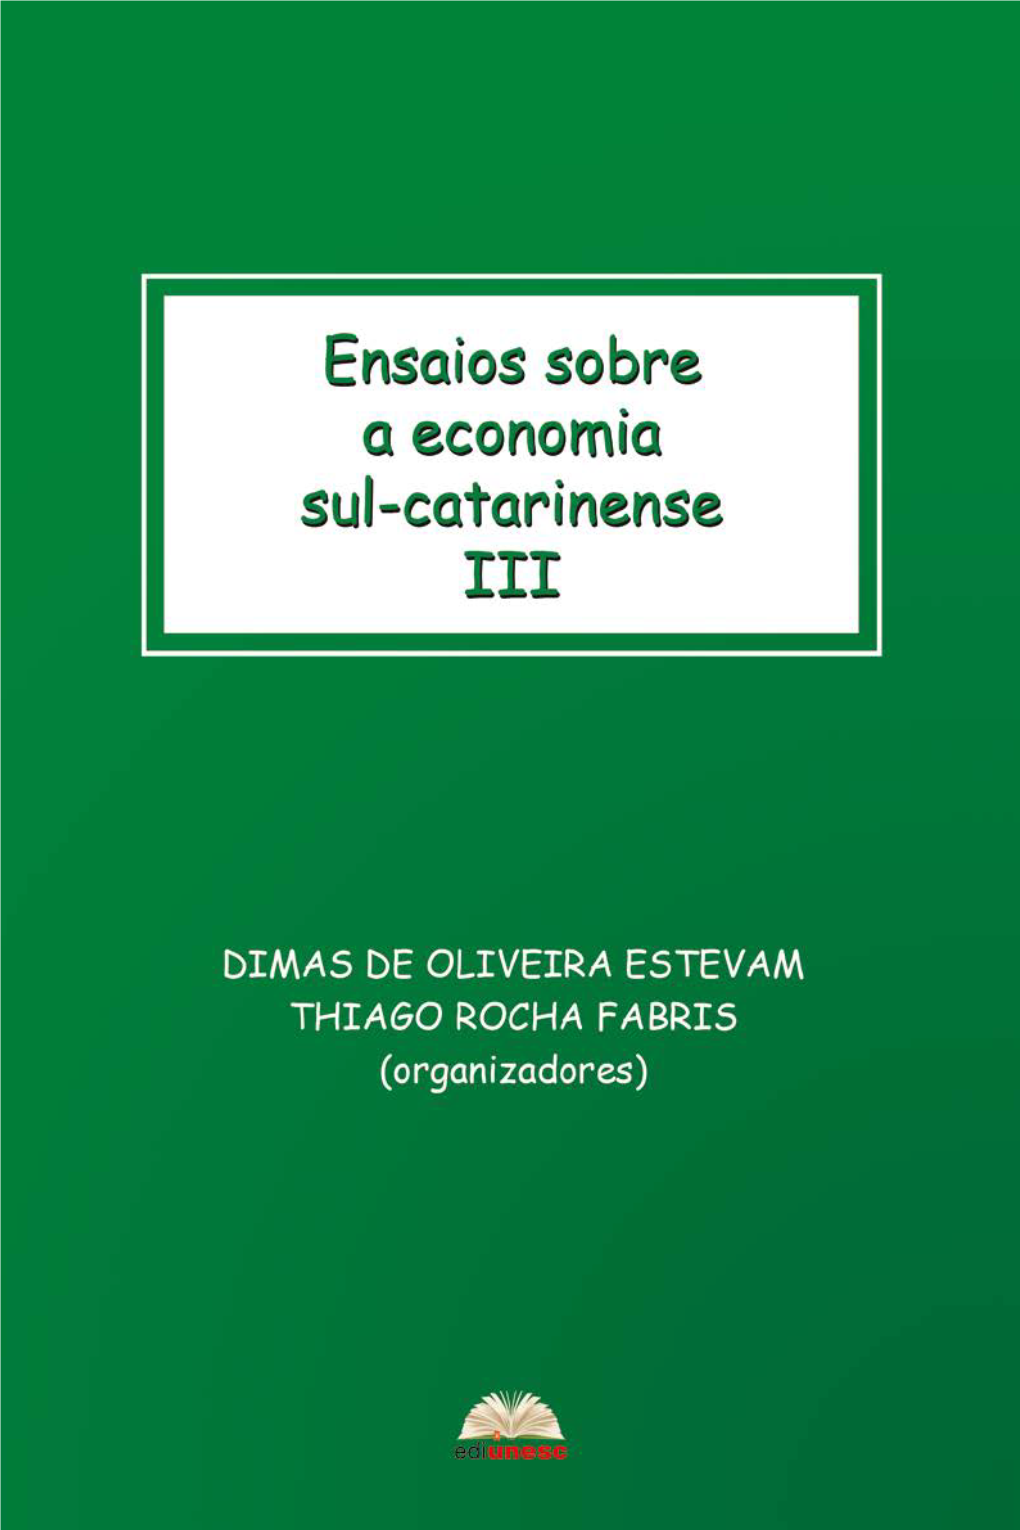 ENSAIOS SOBRE a ECONOMIA SUL-CATARINENSE Volume III